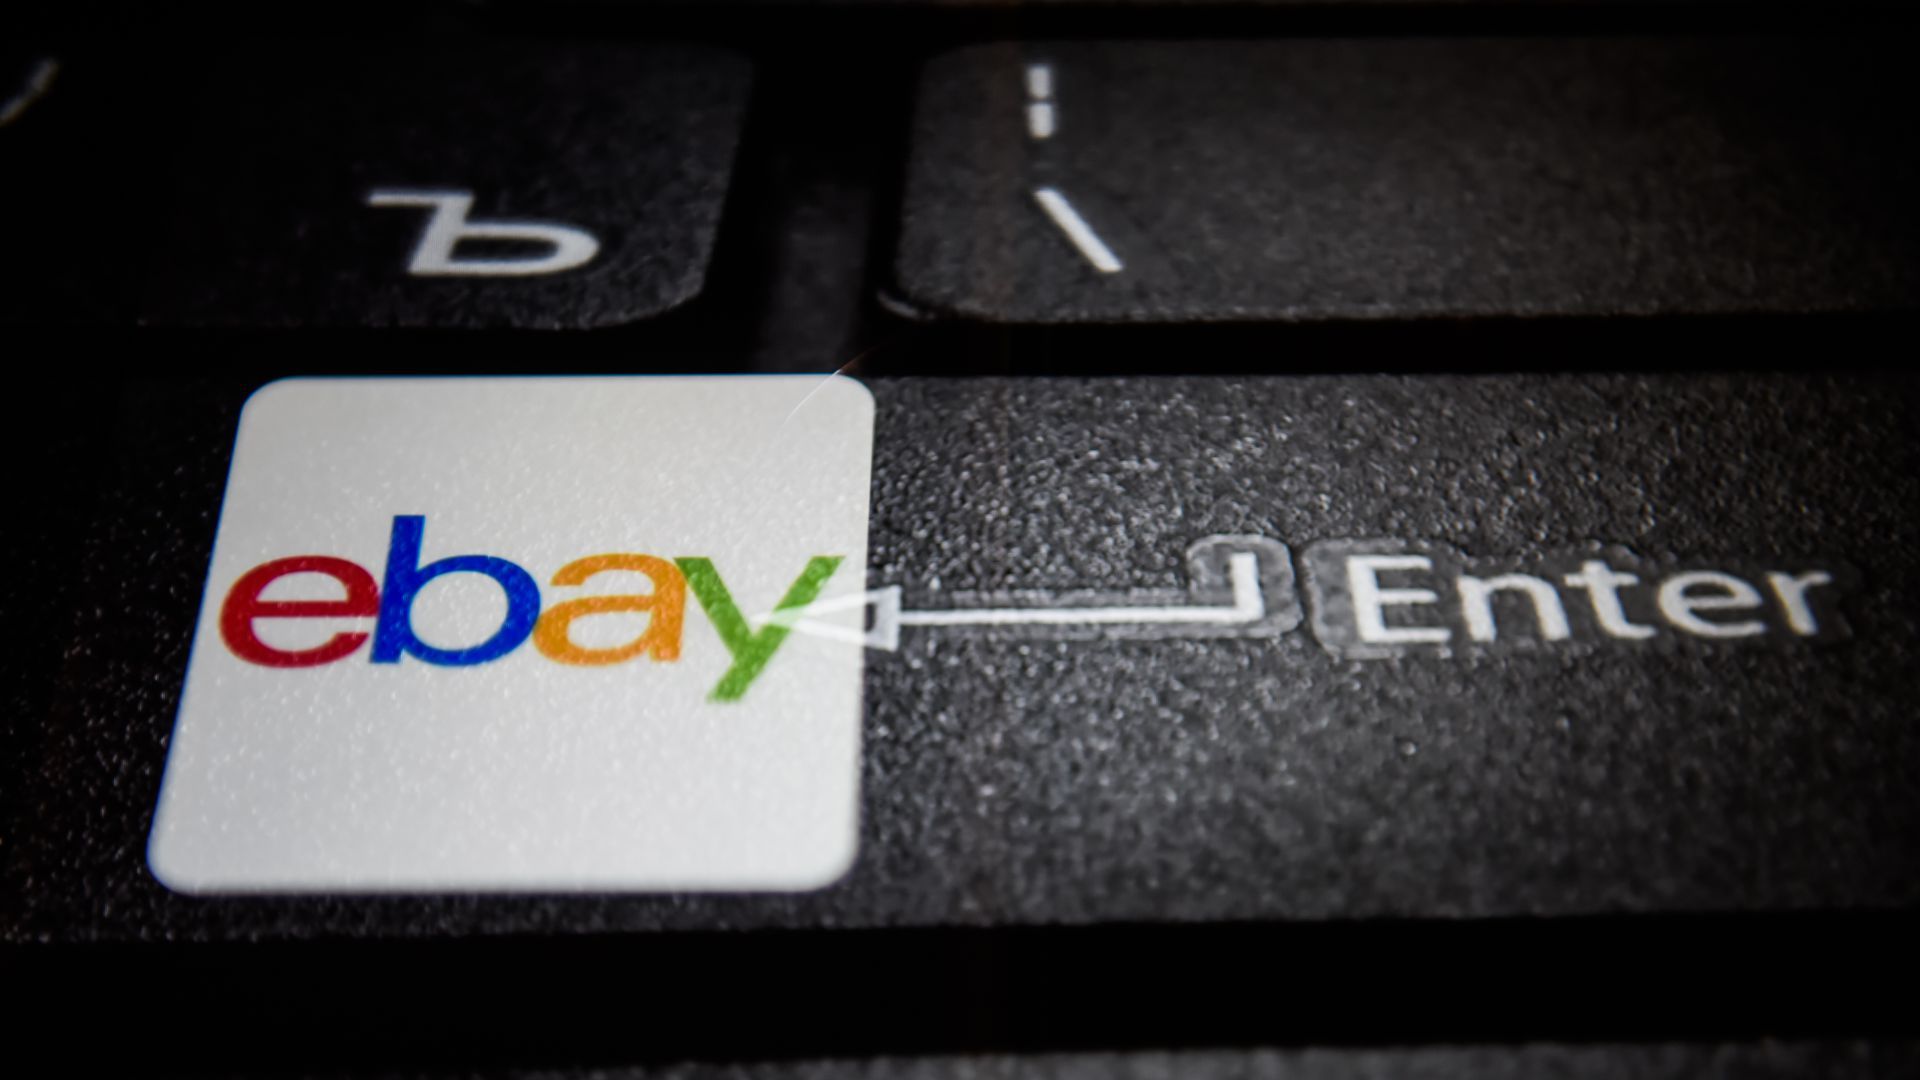 ebay logo marked as a keyboard key